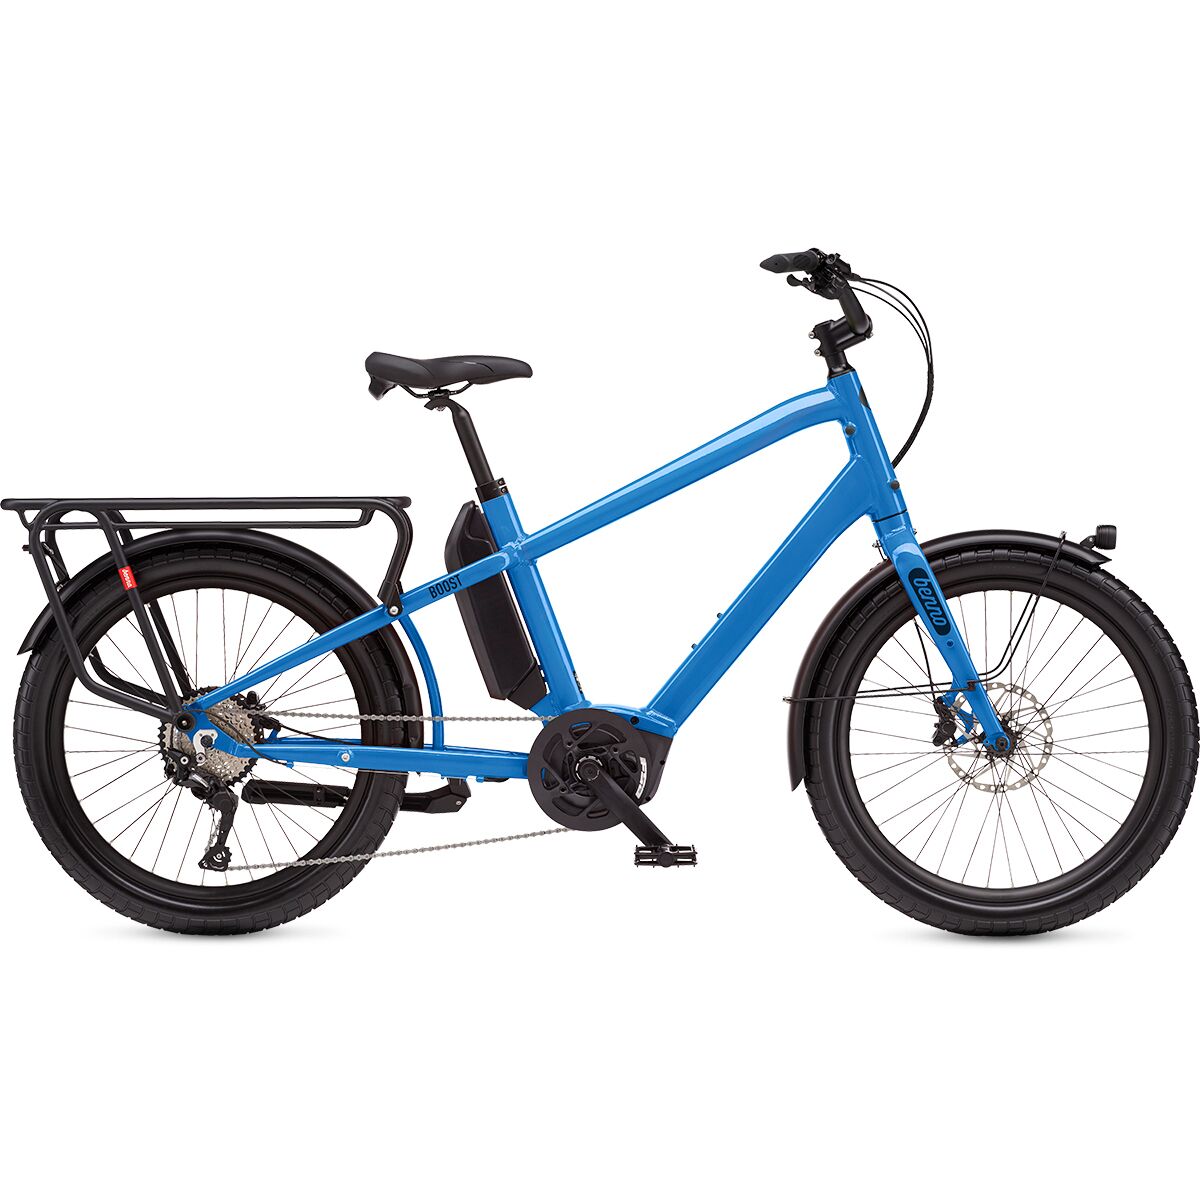 Benno Bikes Boost Performance e-Bike Machine Blue, One Size